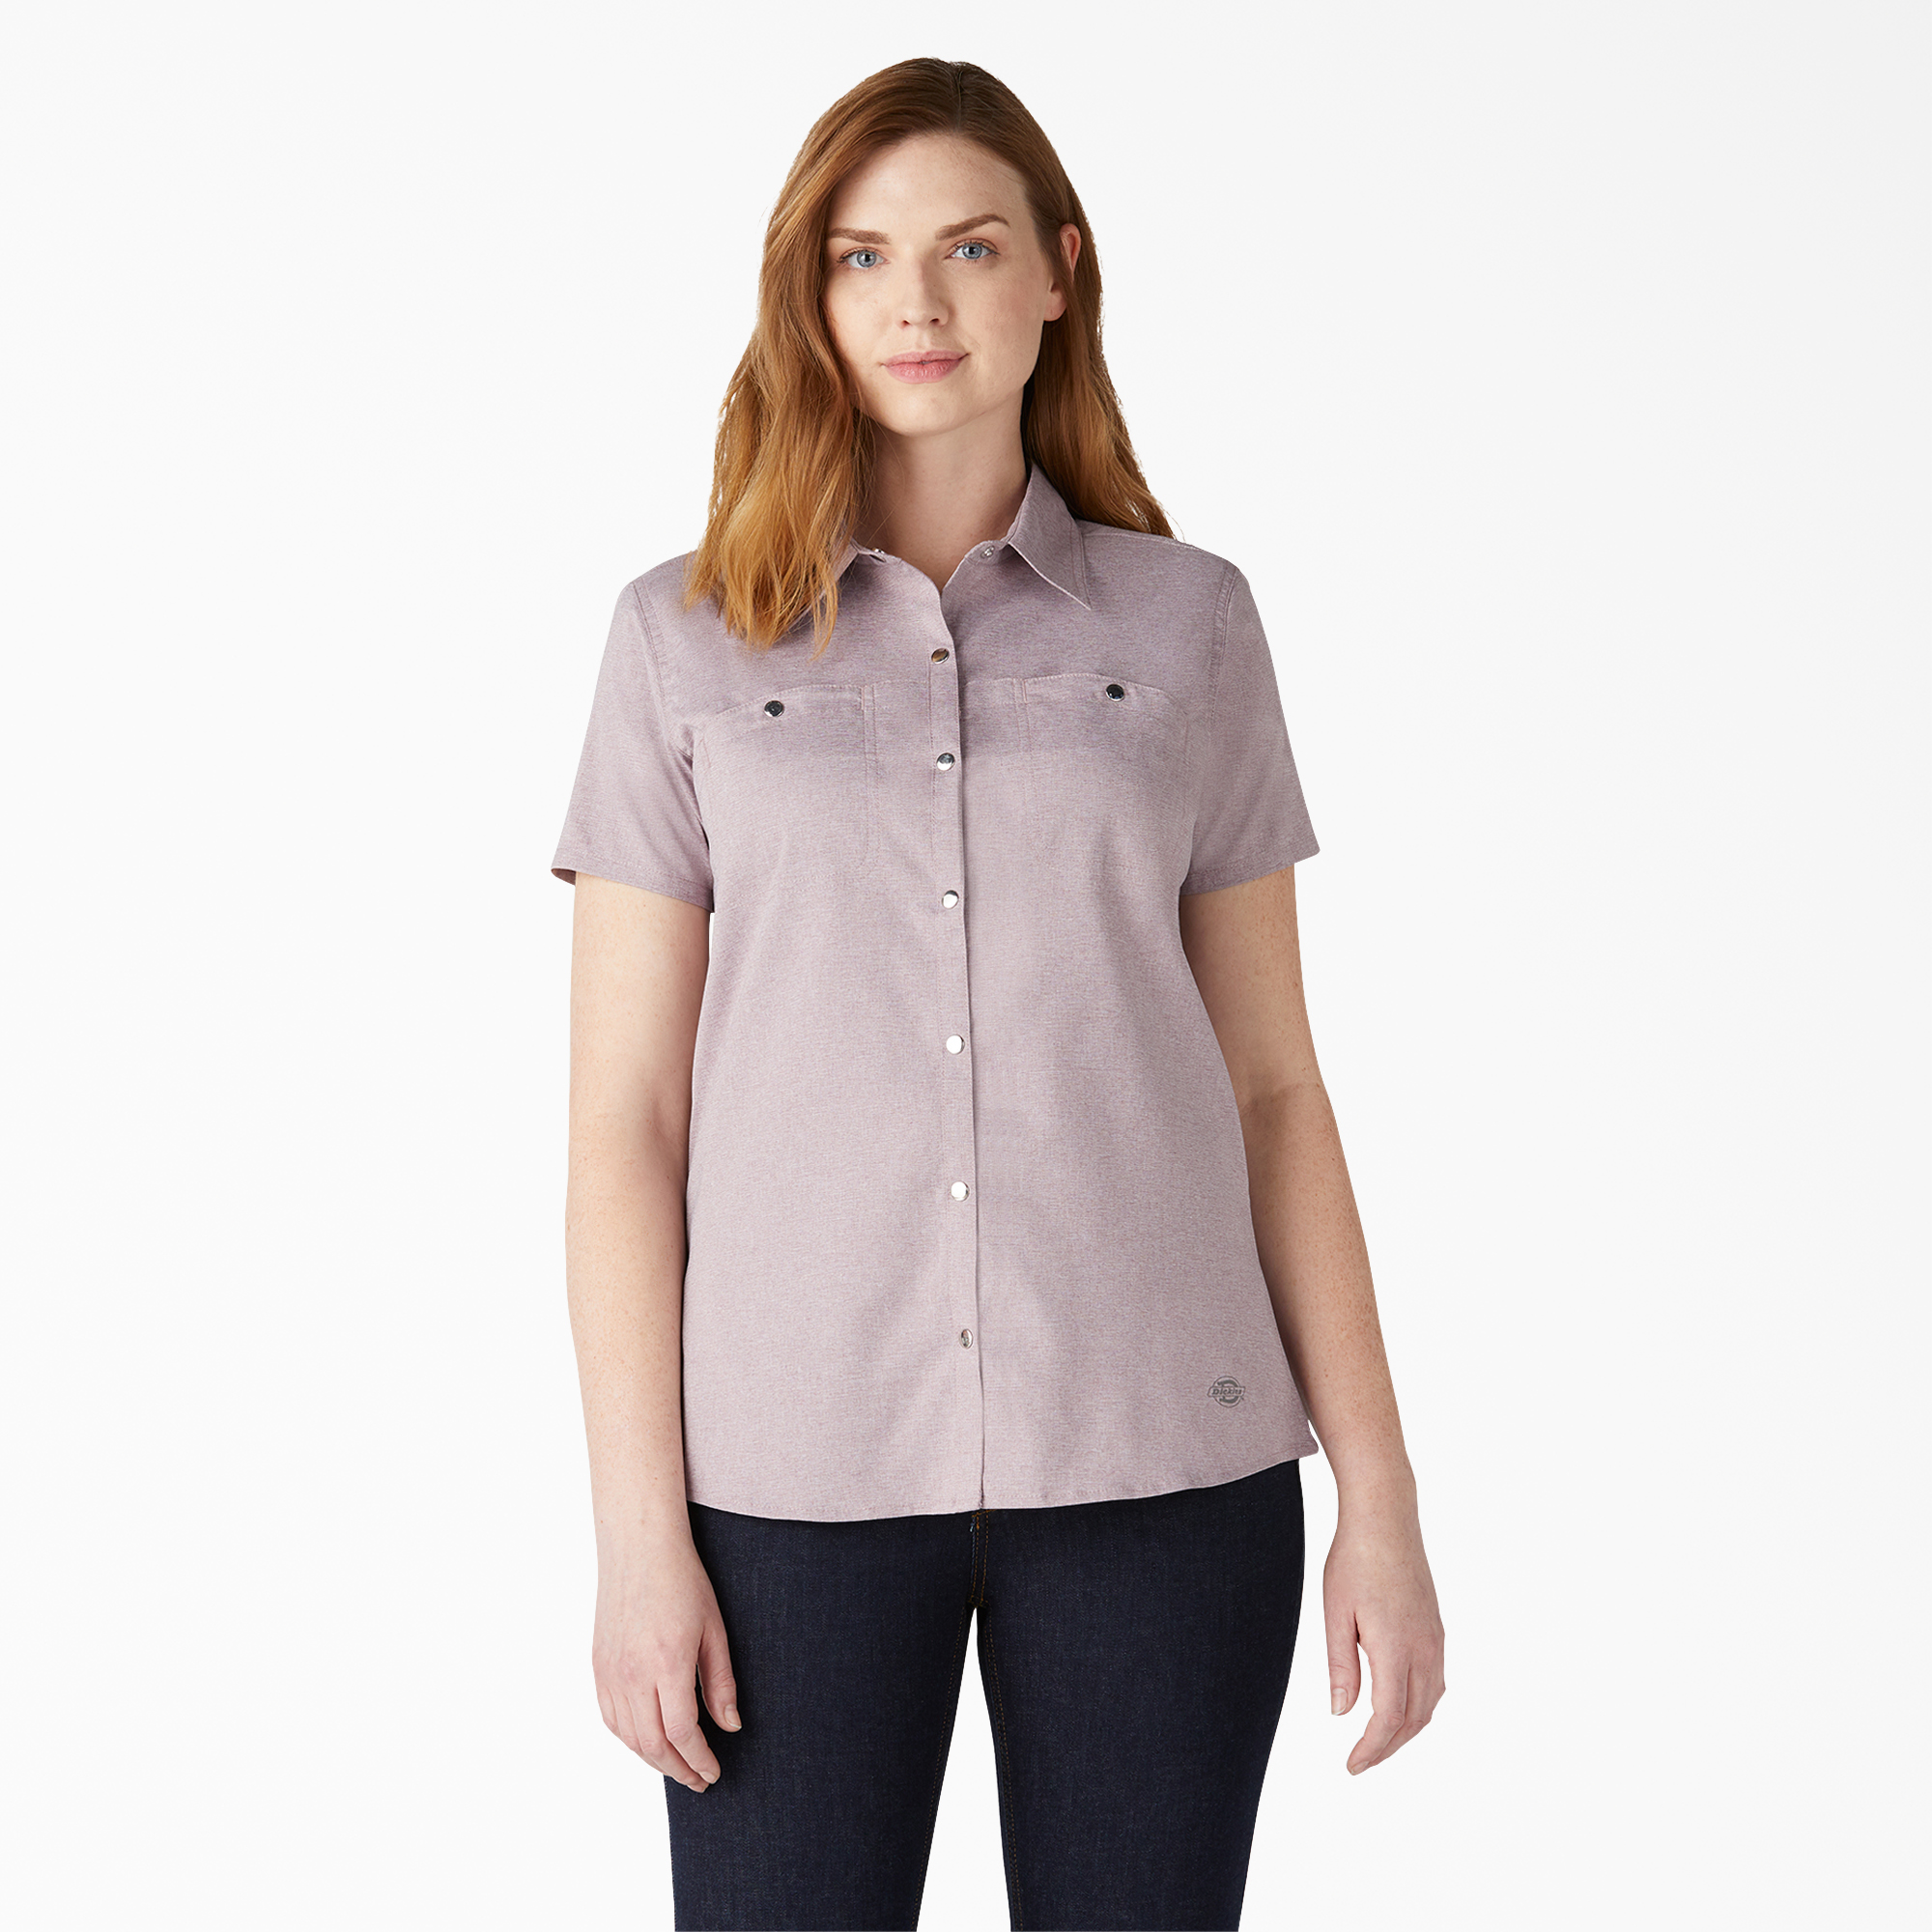 Women's Cooling Short Sleeve Work Shirt - Lilac Heather (ICH)